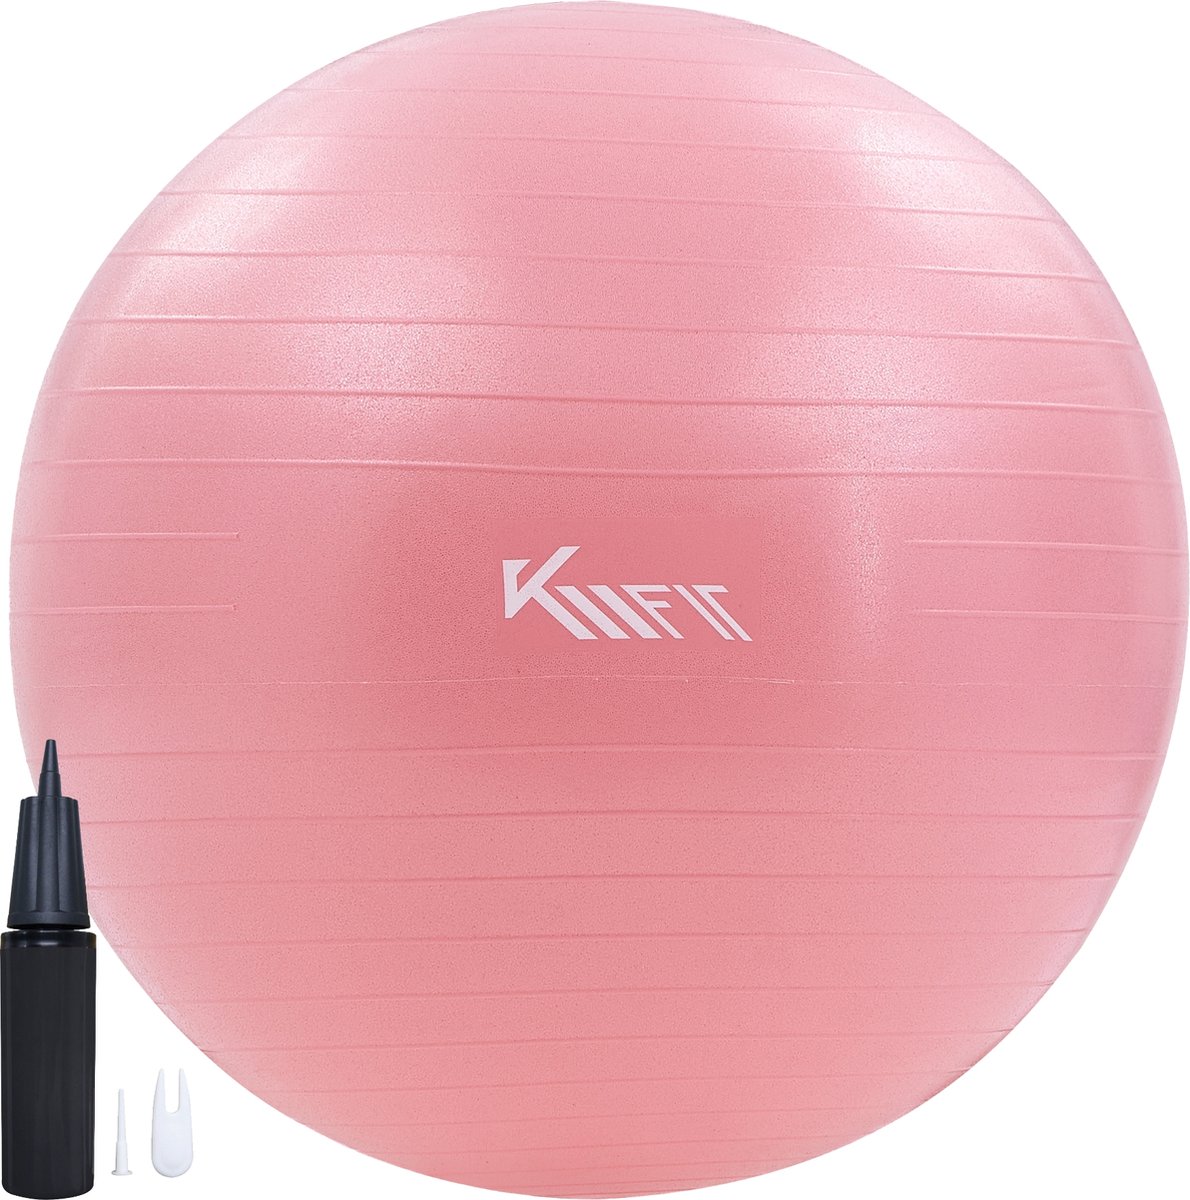 KM-Fit Yoga Bal - 65 cm - Fitness Bal inclusief pomp - Pilates bal - BPA-vrij materiaal - Zwangerschapsbal - Roze